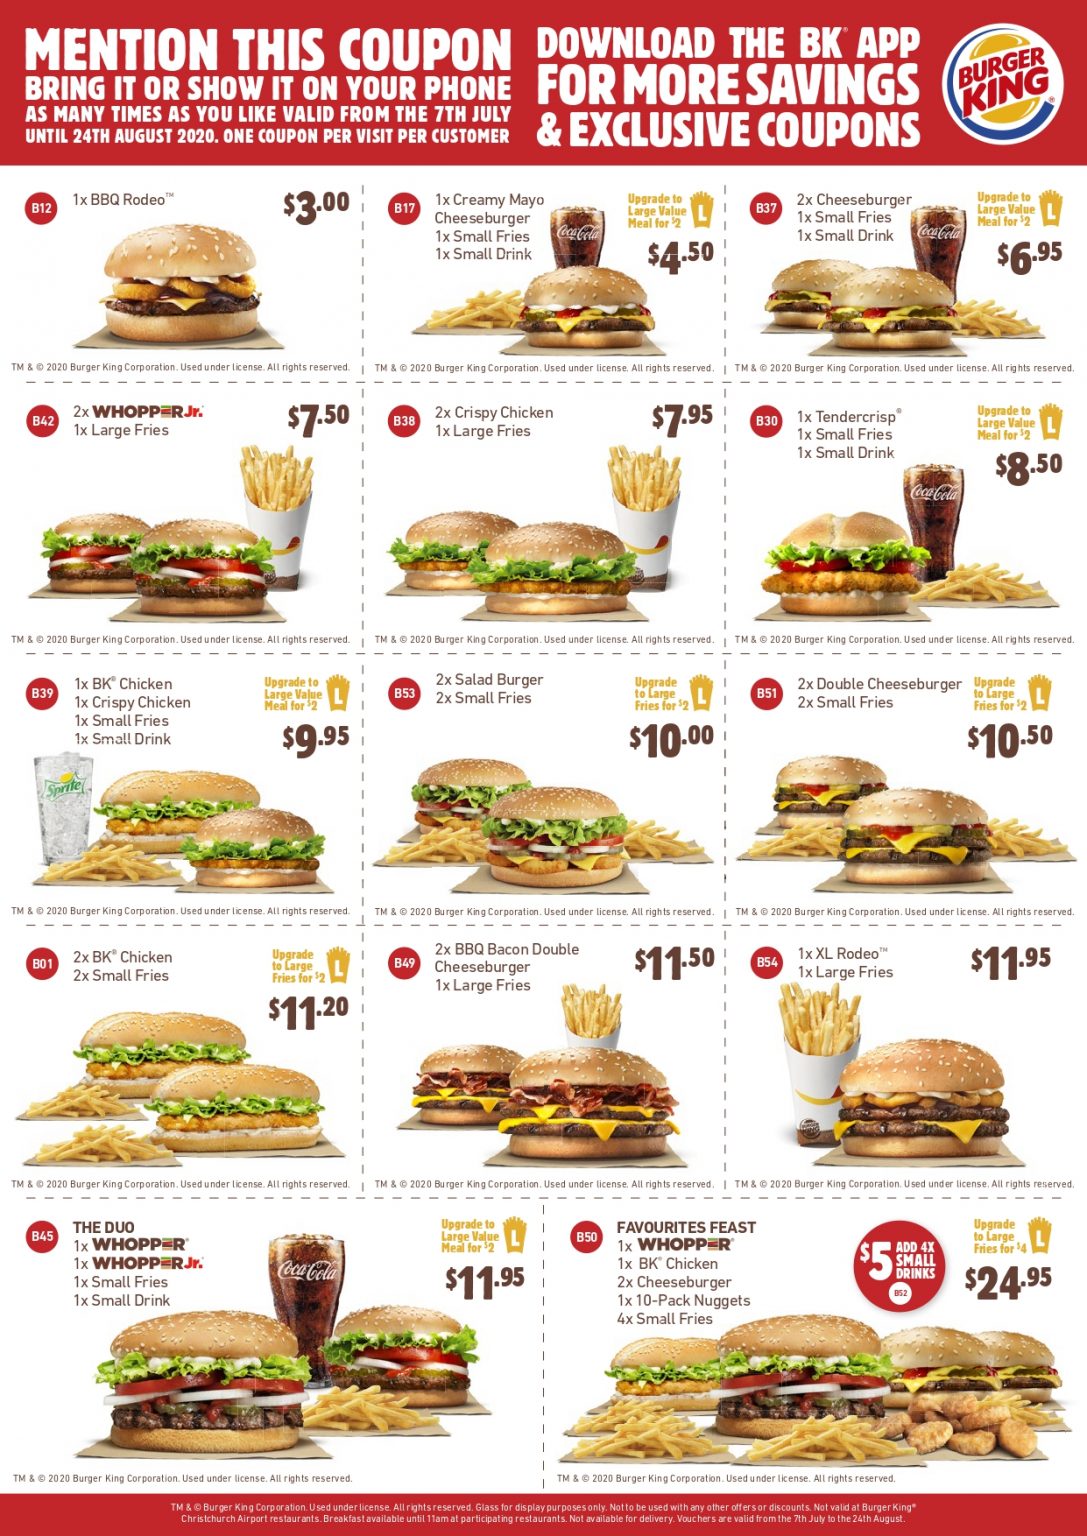 DEAL Burger King Coupons valid until 12 October 2020 Latest BK